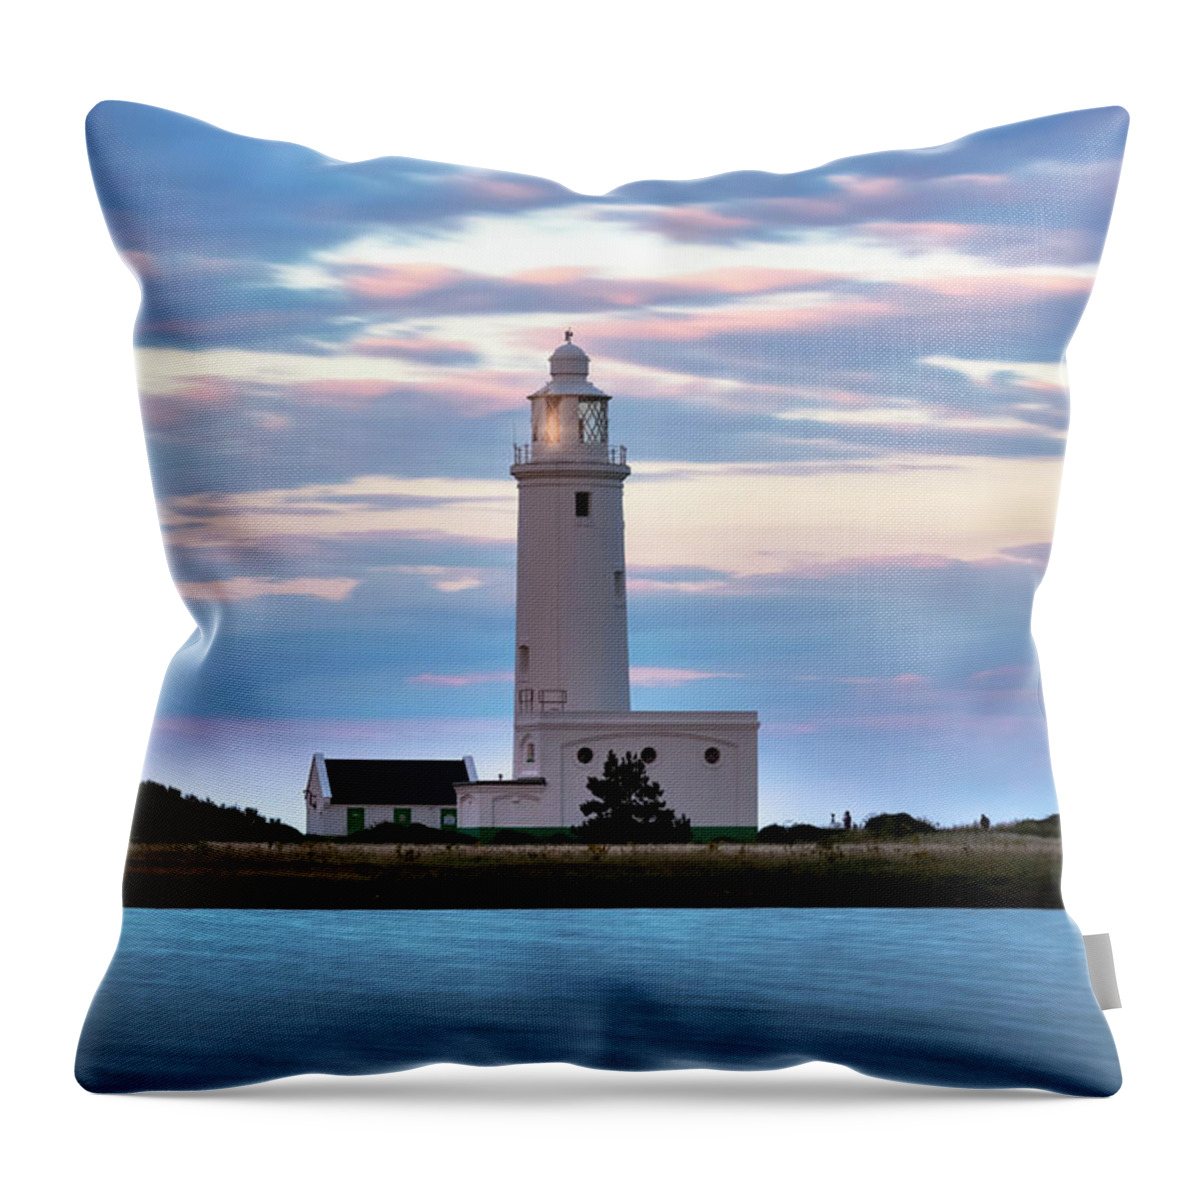 Hurst Point Lighthouse Throw Pillow featuring the photograph Hurst Point Lighthouse - England #8 by Joana Kruse